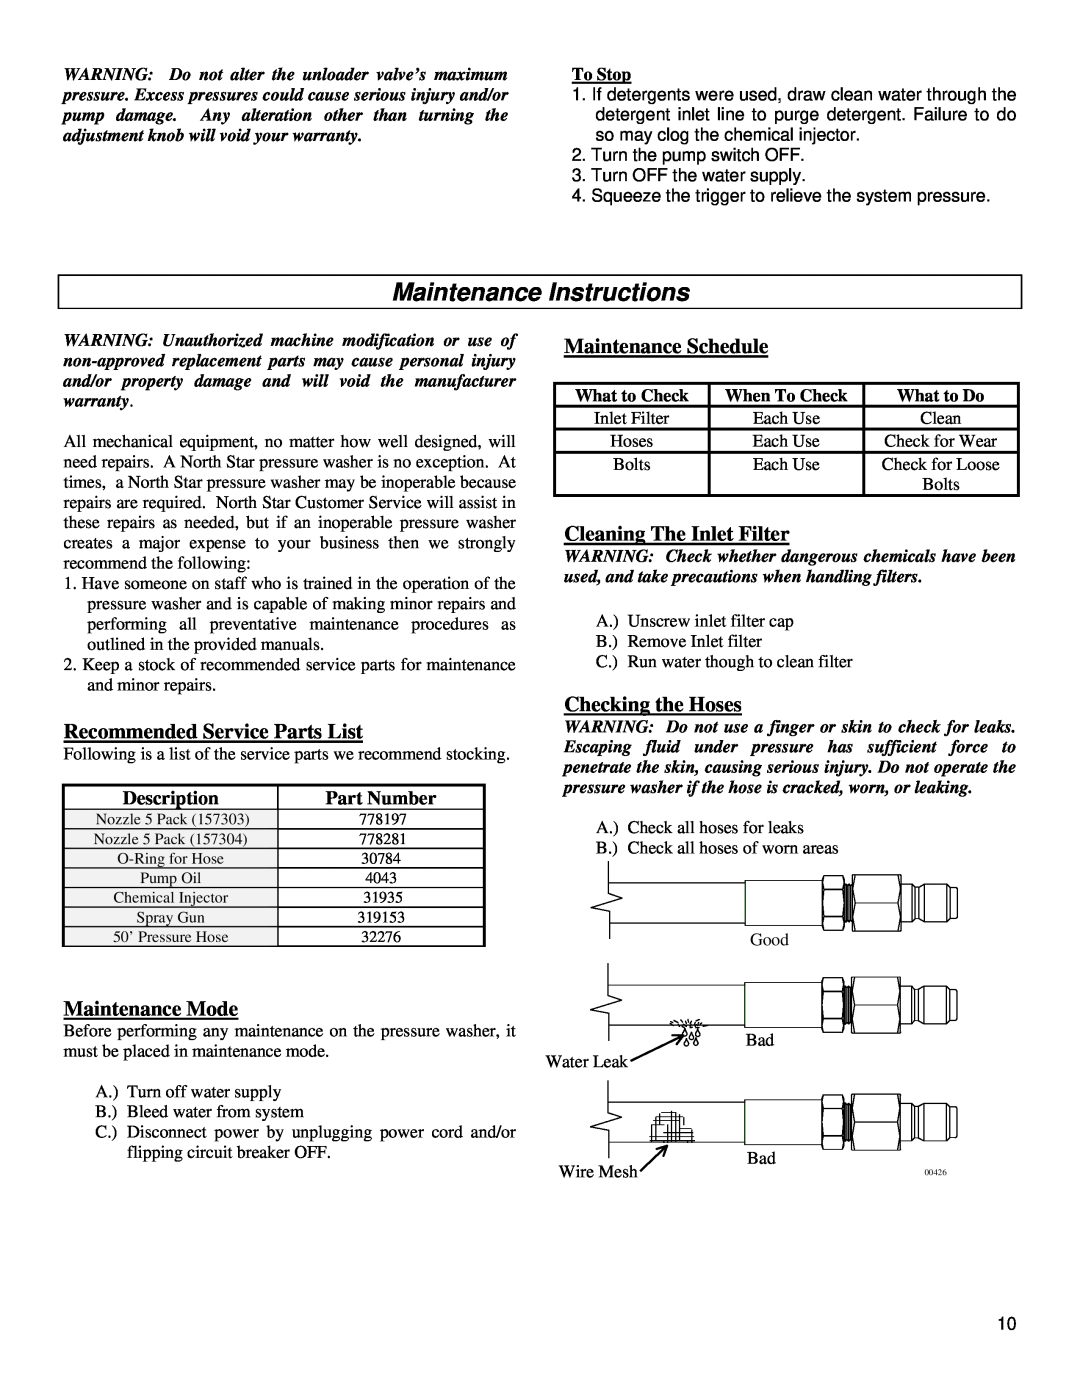 North Star M157304E Maintenance Instructions, Recommended Service Parts List, Maintenance Mode, Maintenance Schedule 